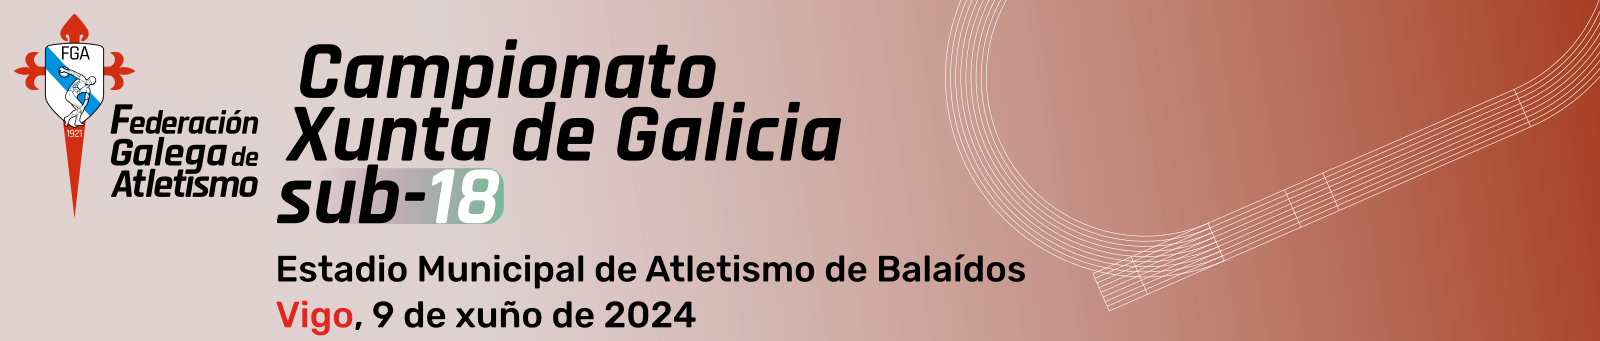  Campionato Xunta de Galicia Sub-18.  Estadio Municipal de Atletismo de Balaídos, 9 xuño 2024